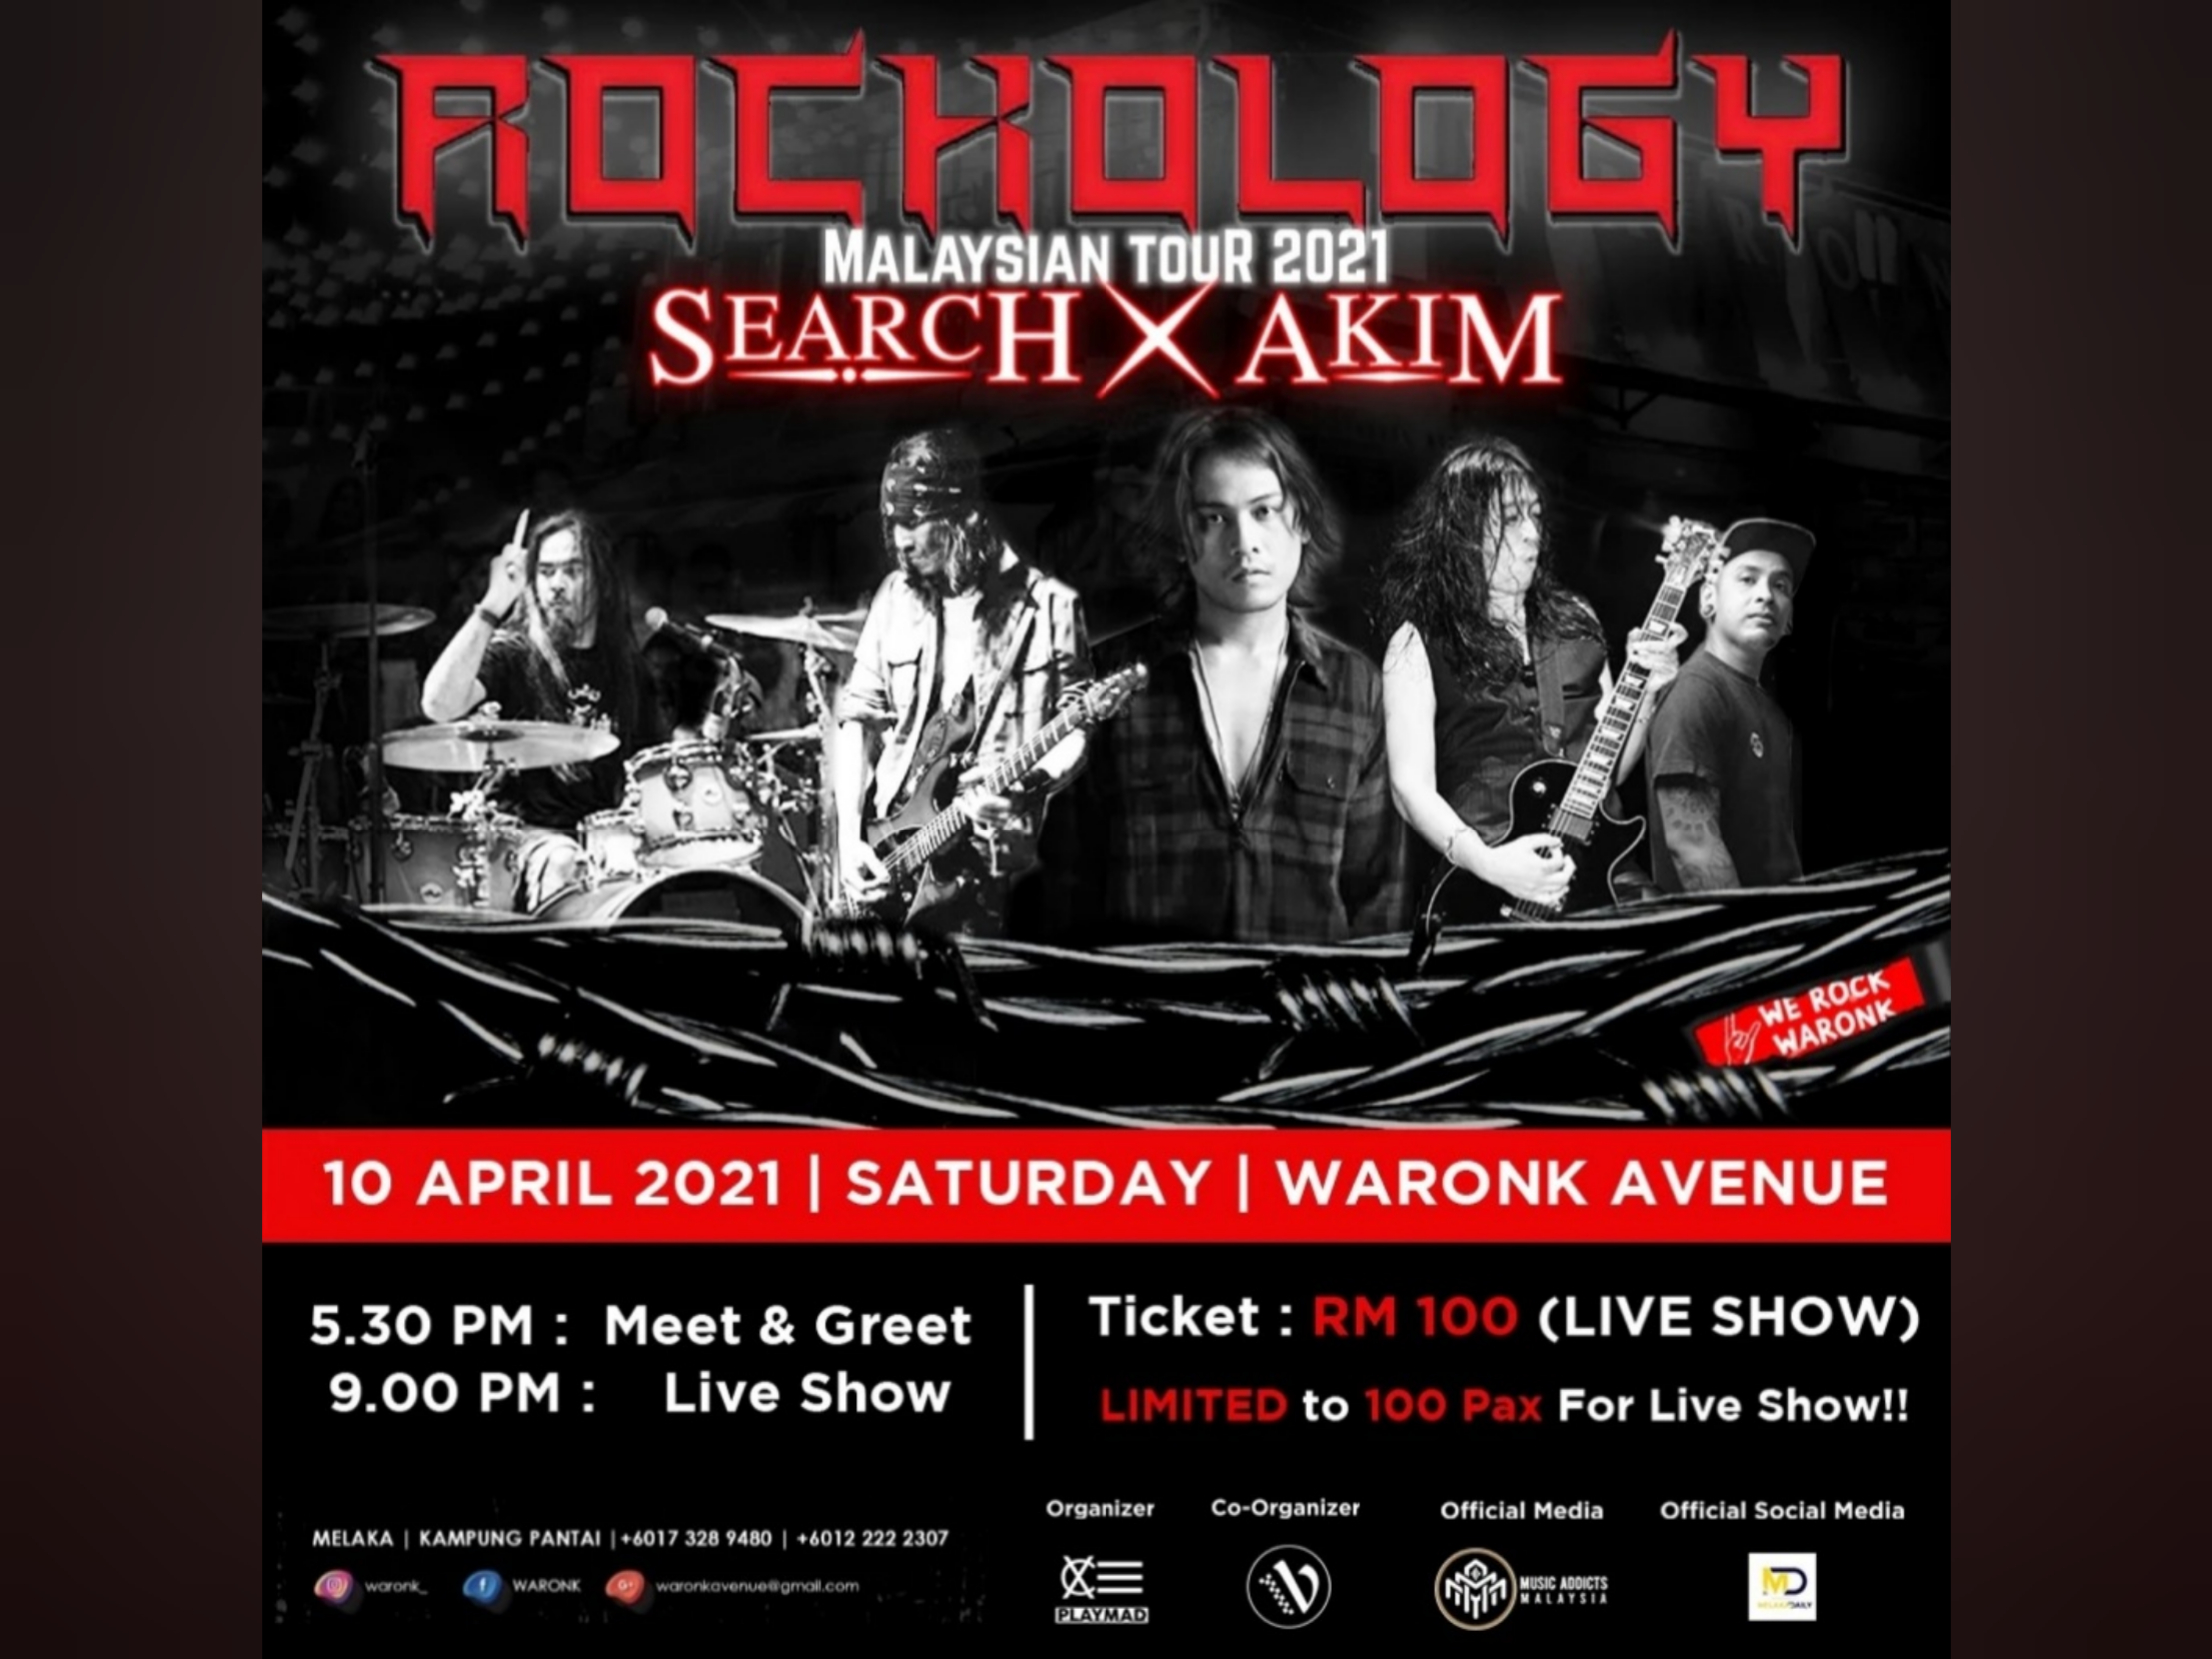 Rockology Malaysian Tour 2021 : Akim anggota baru Search ? - The Malaya Post